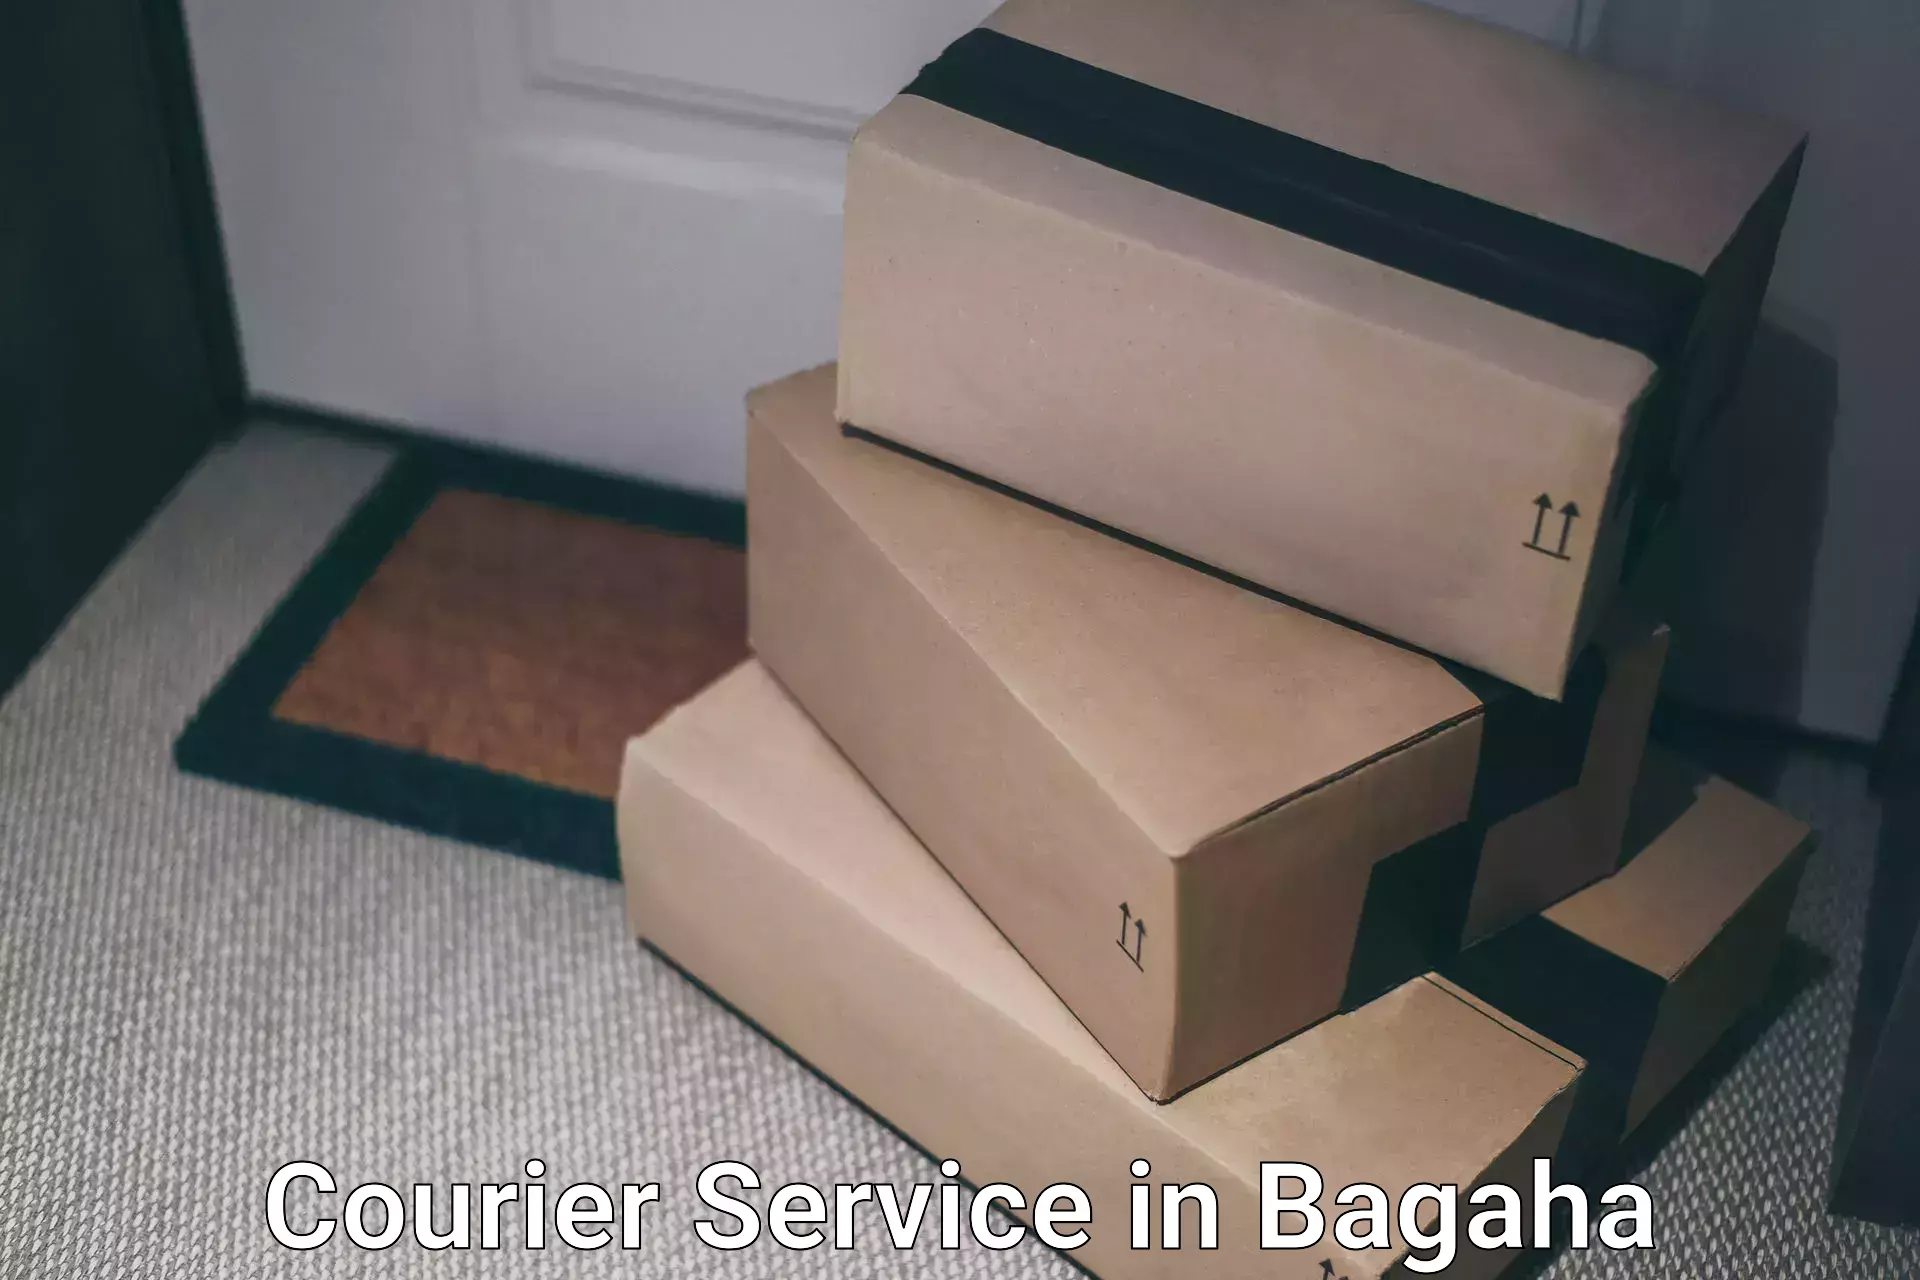 Logistics efficiency in Bagaha